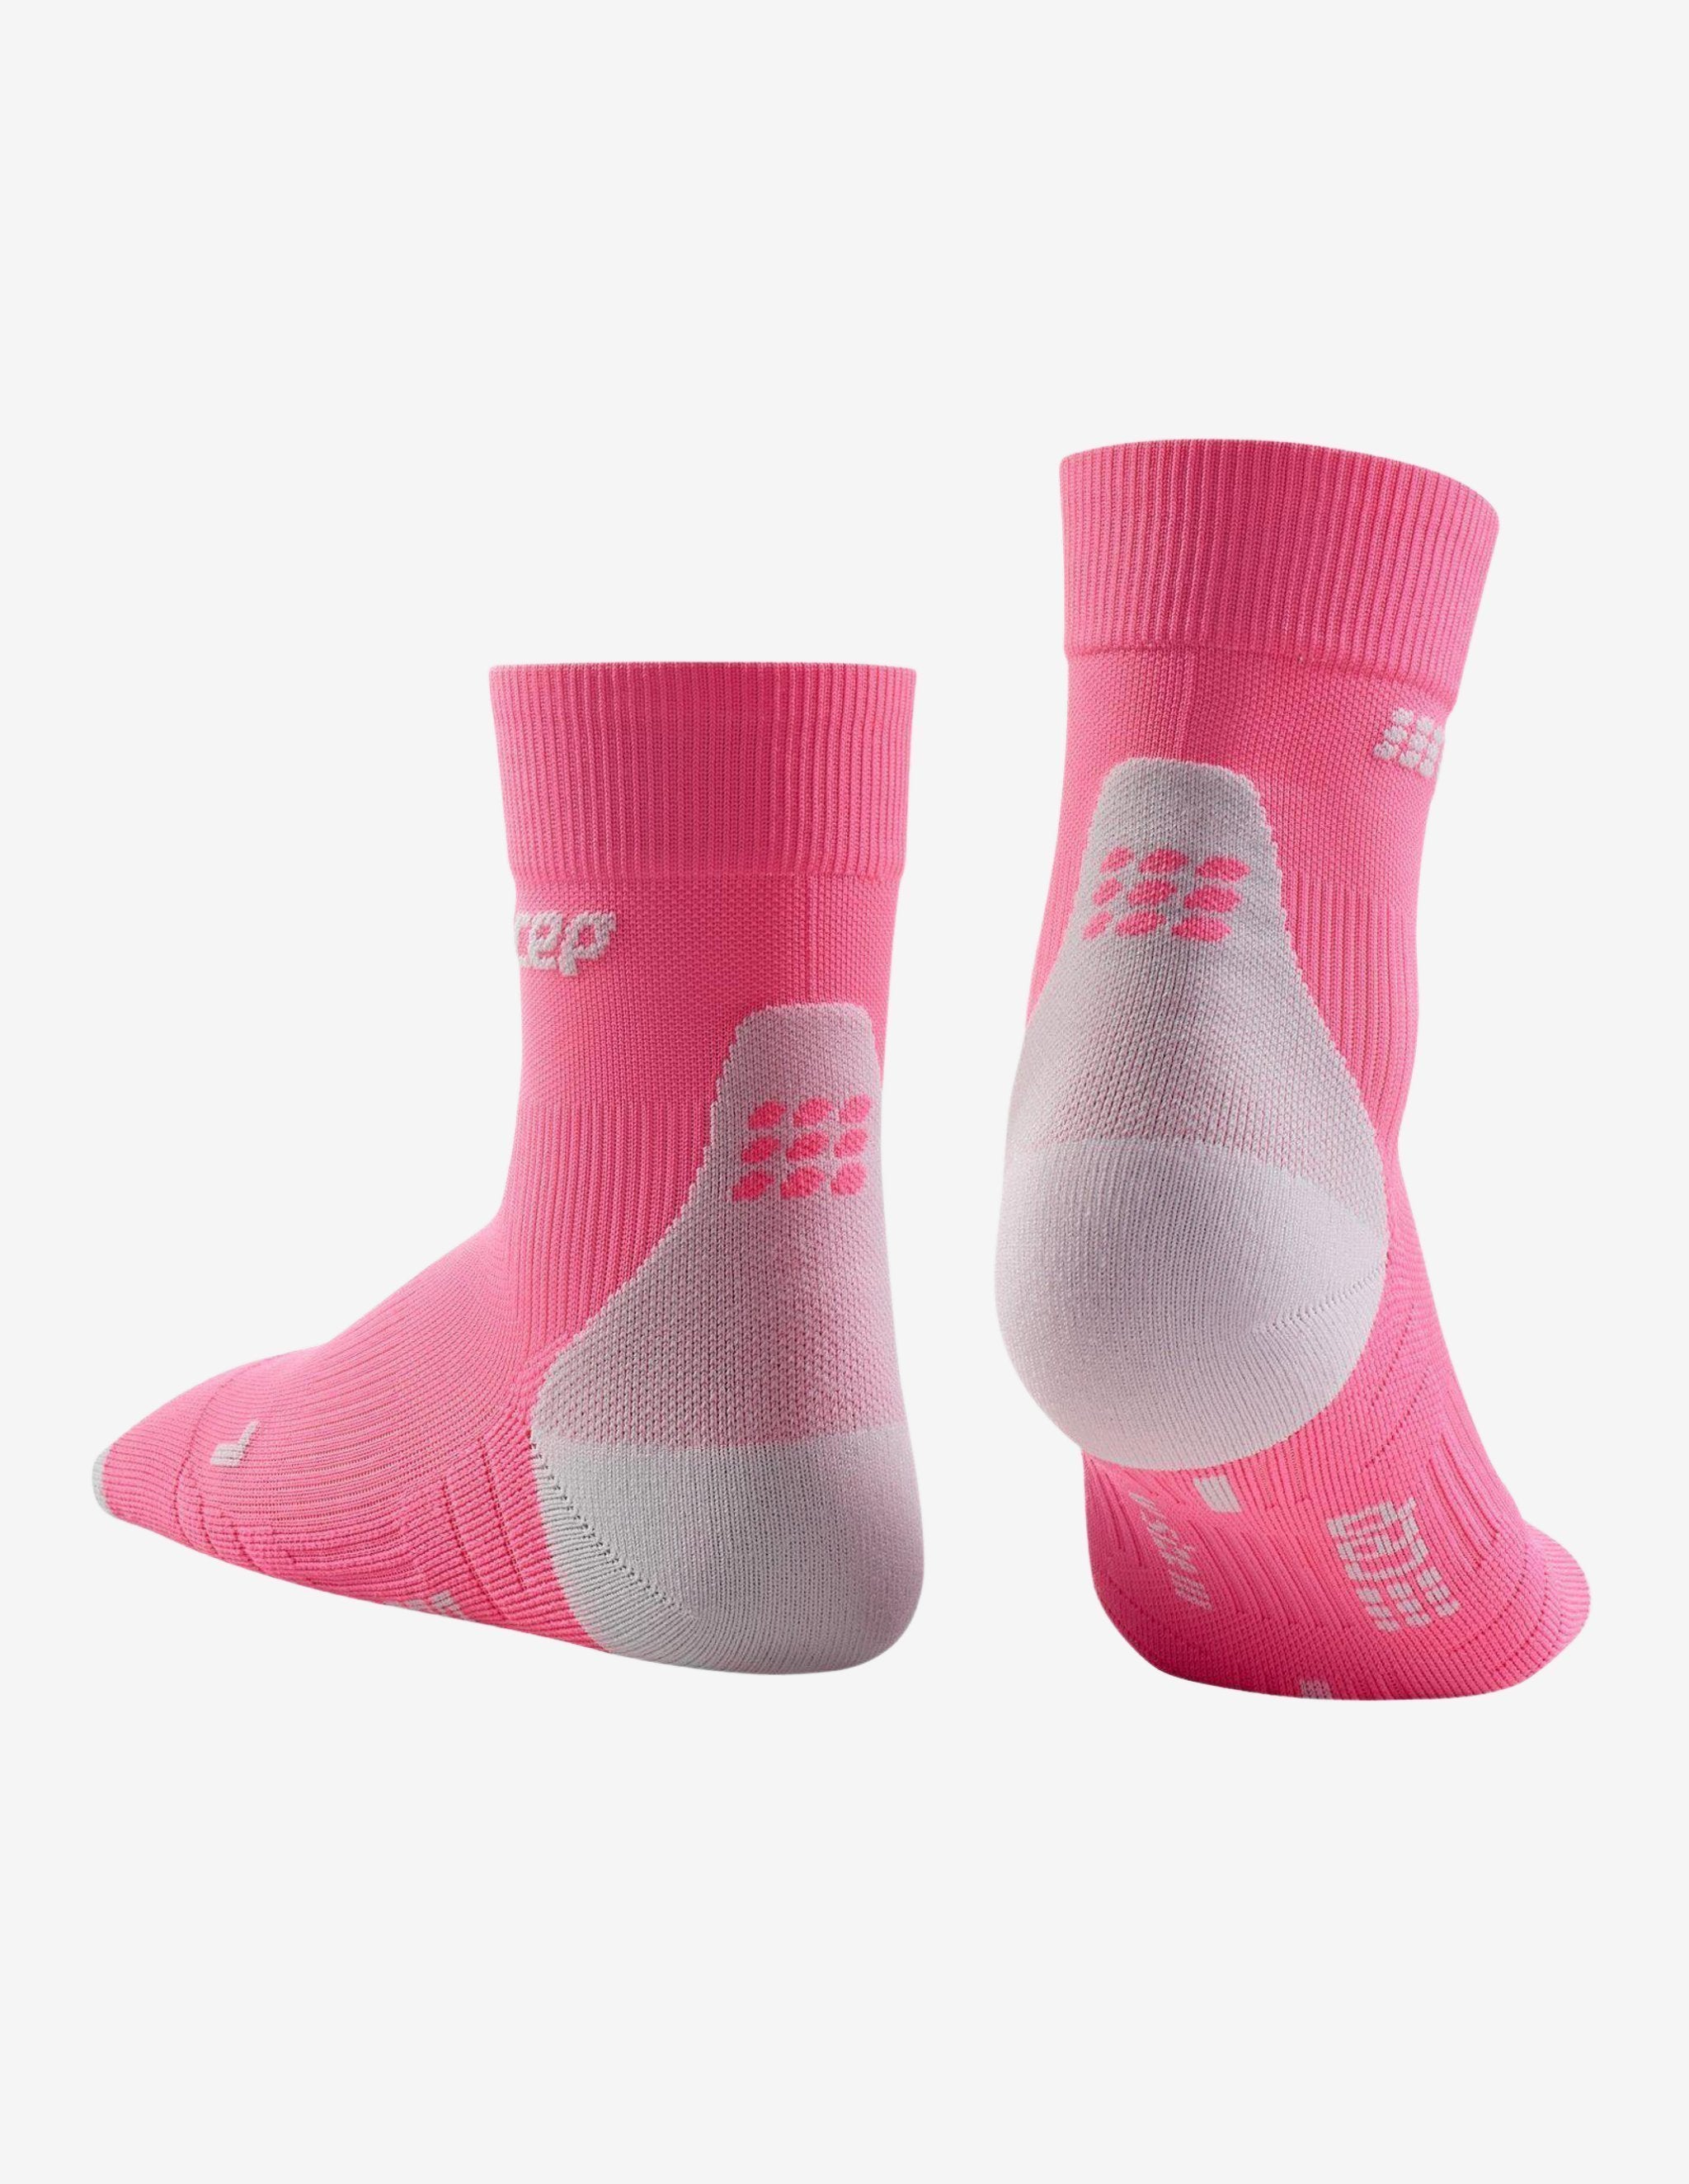 CEP Socks Short Cut 3.0 Pink/Grey-Socks-CEP Compression-Guru Muscle